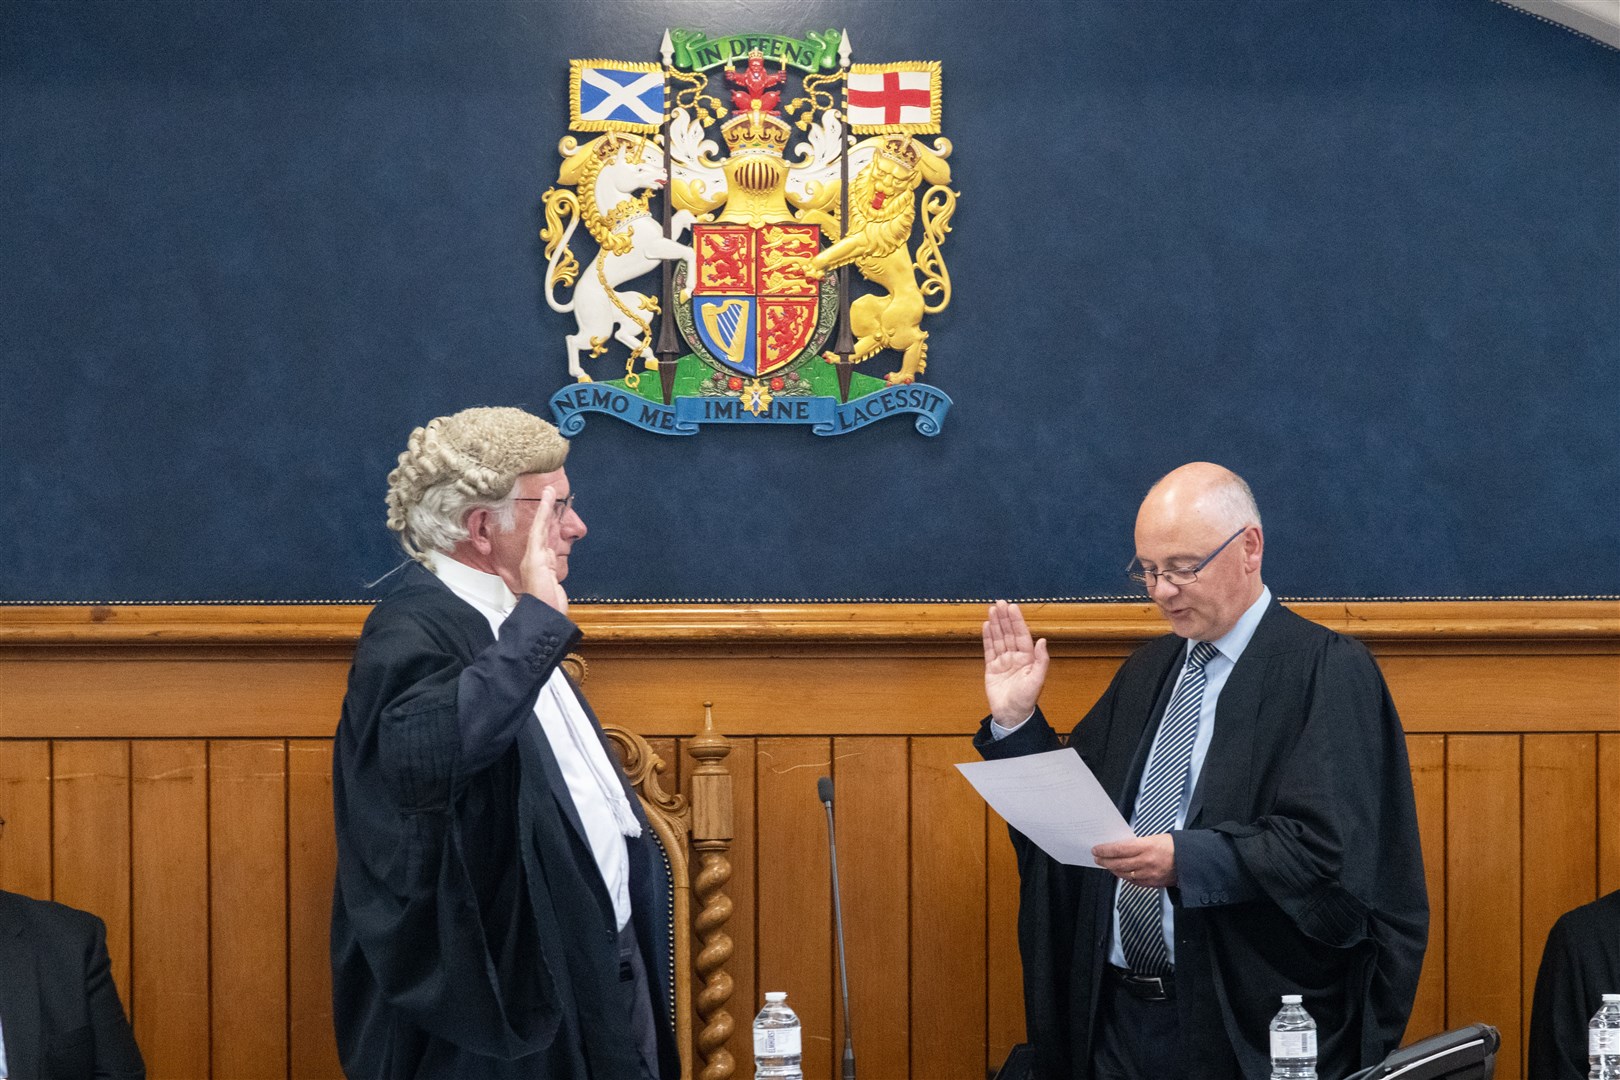 Mr Adams being sworn in. Picture: Beth Taylor